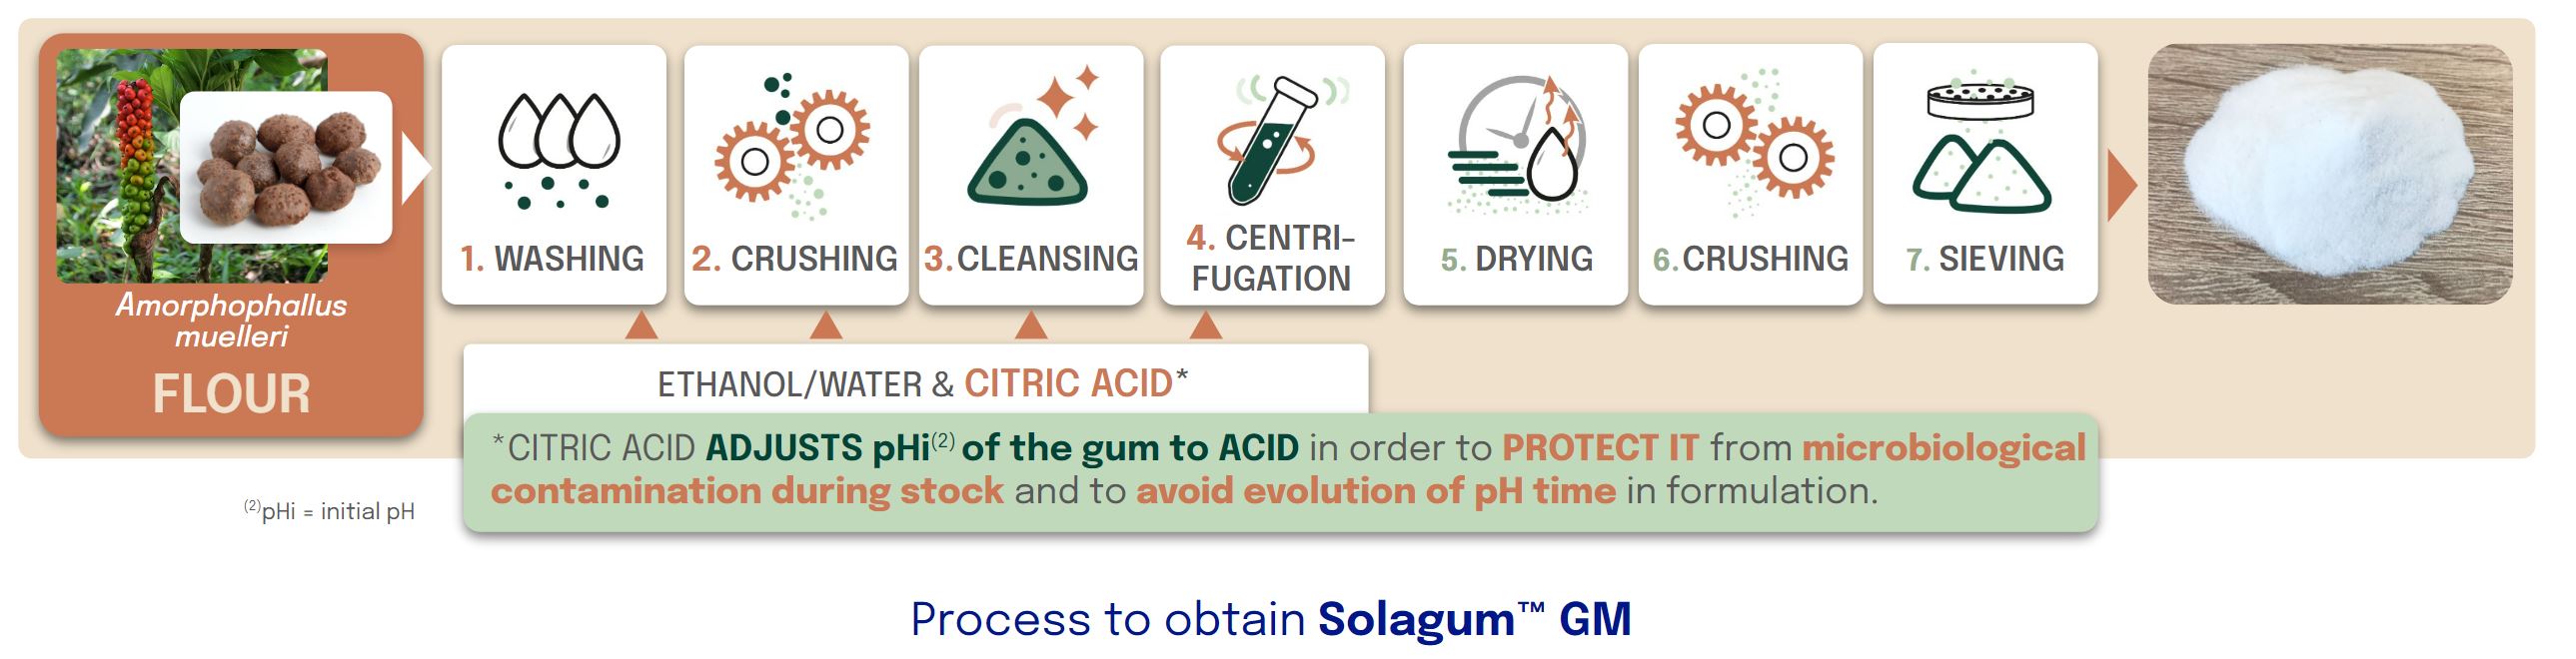 Process to obtain Solagum GM